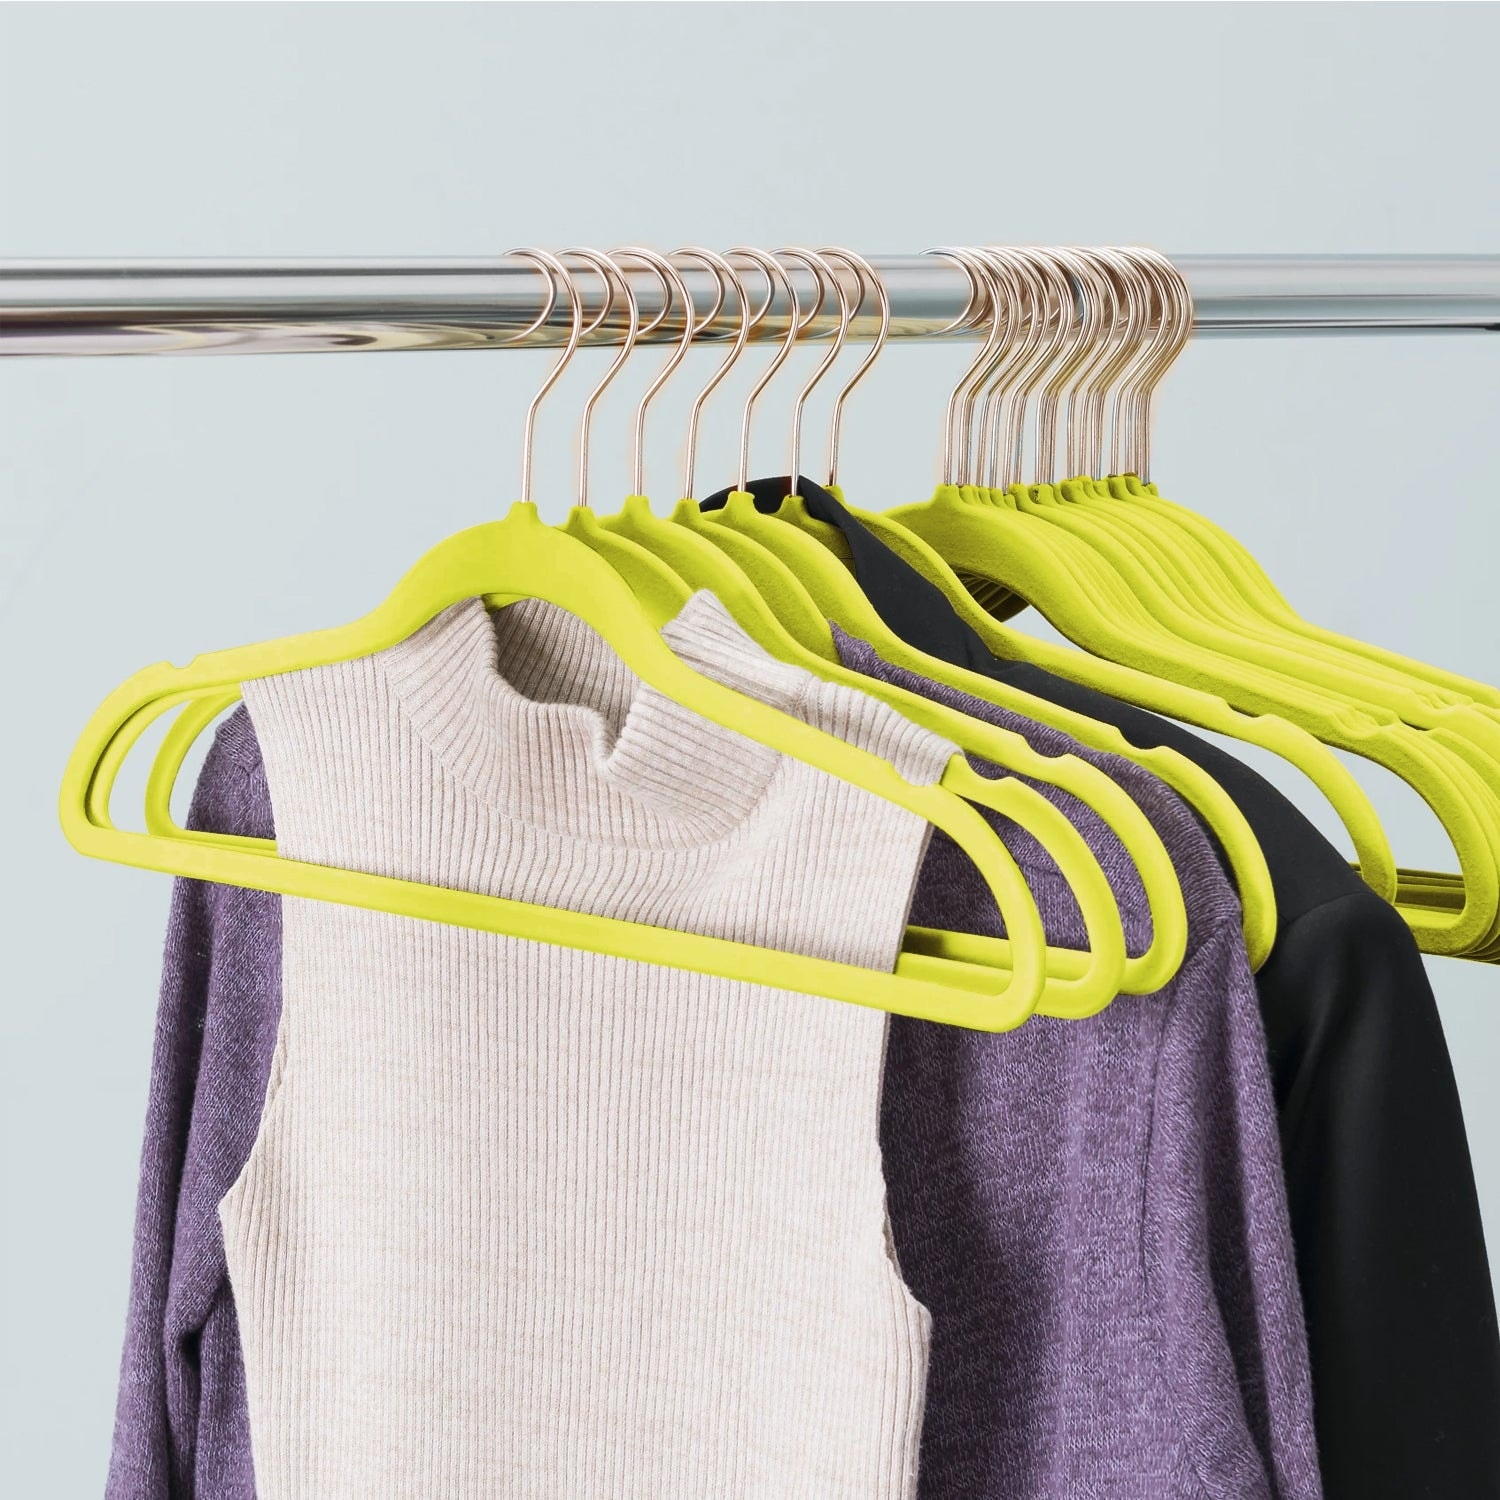 Velvet Hangers Heavy Duty Hangers Sets 30/50/60/100 Pack, Clothes